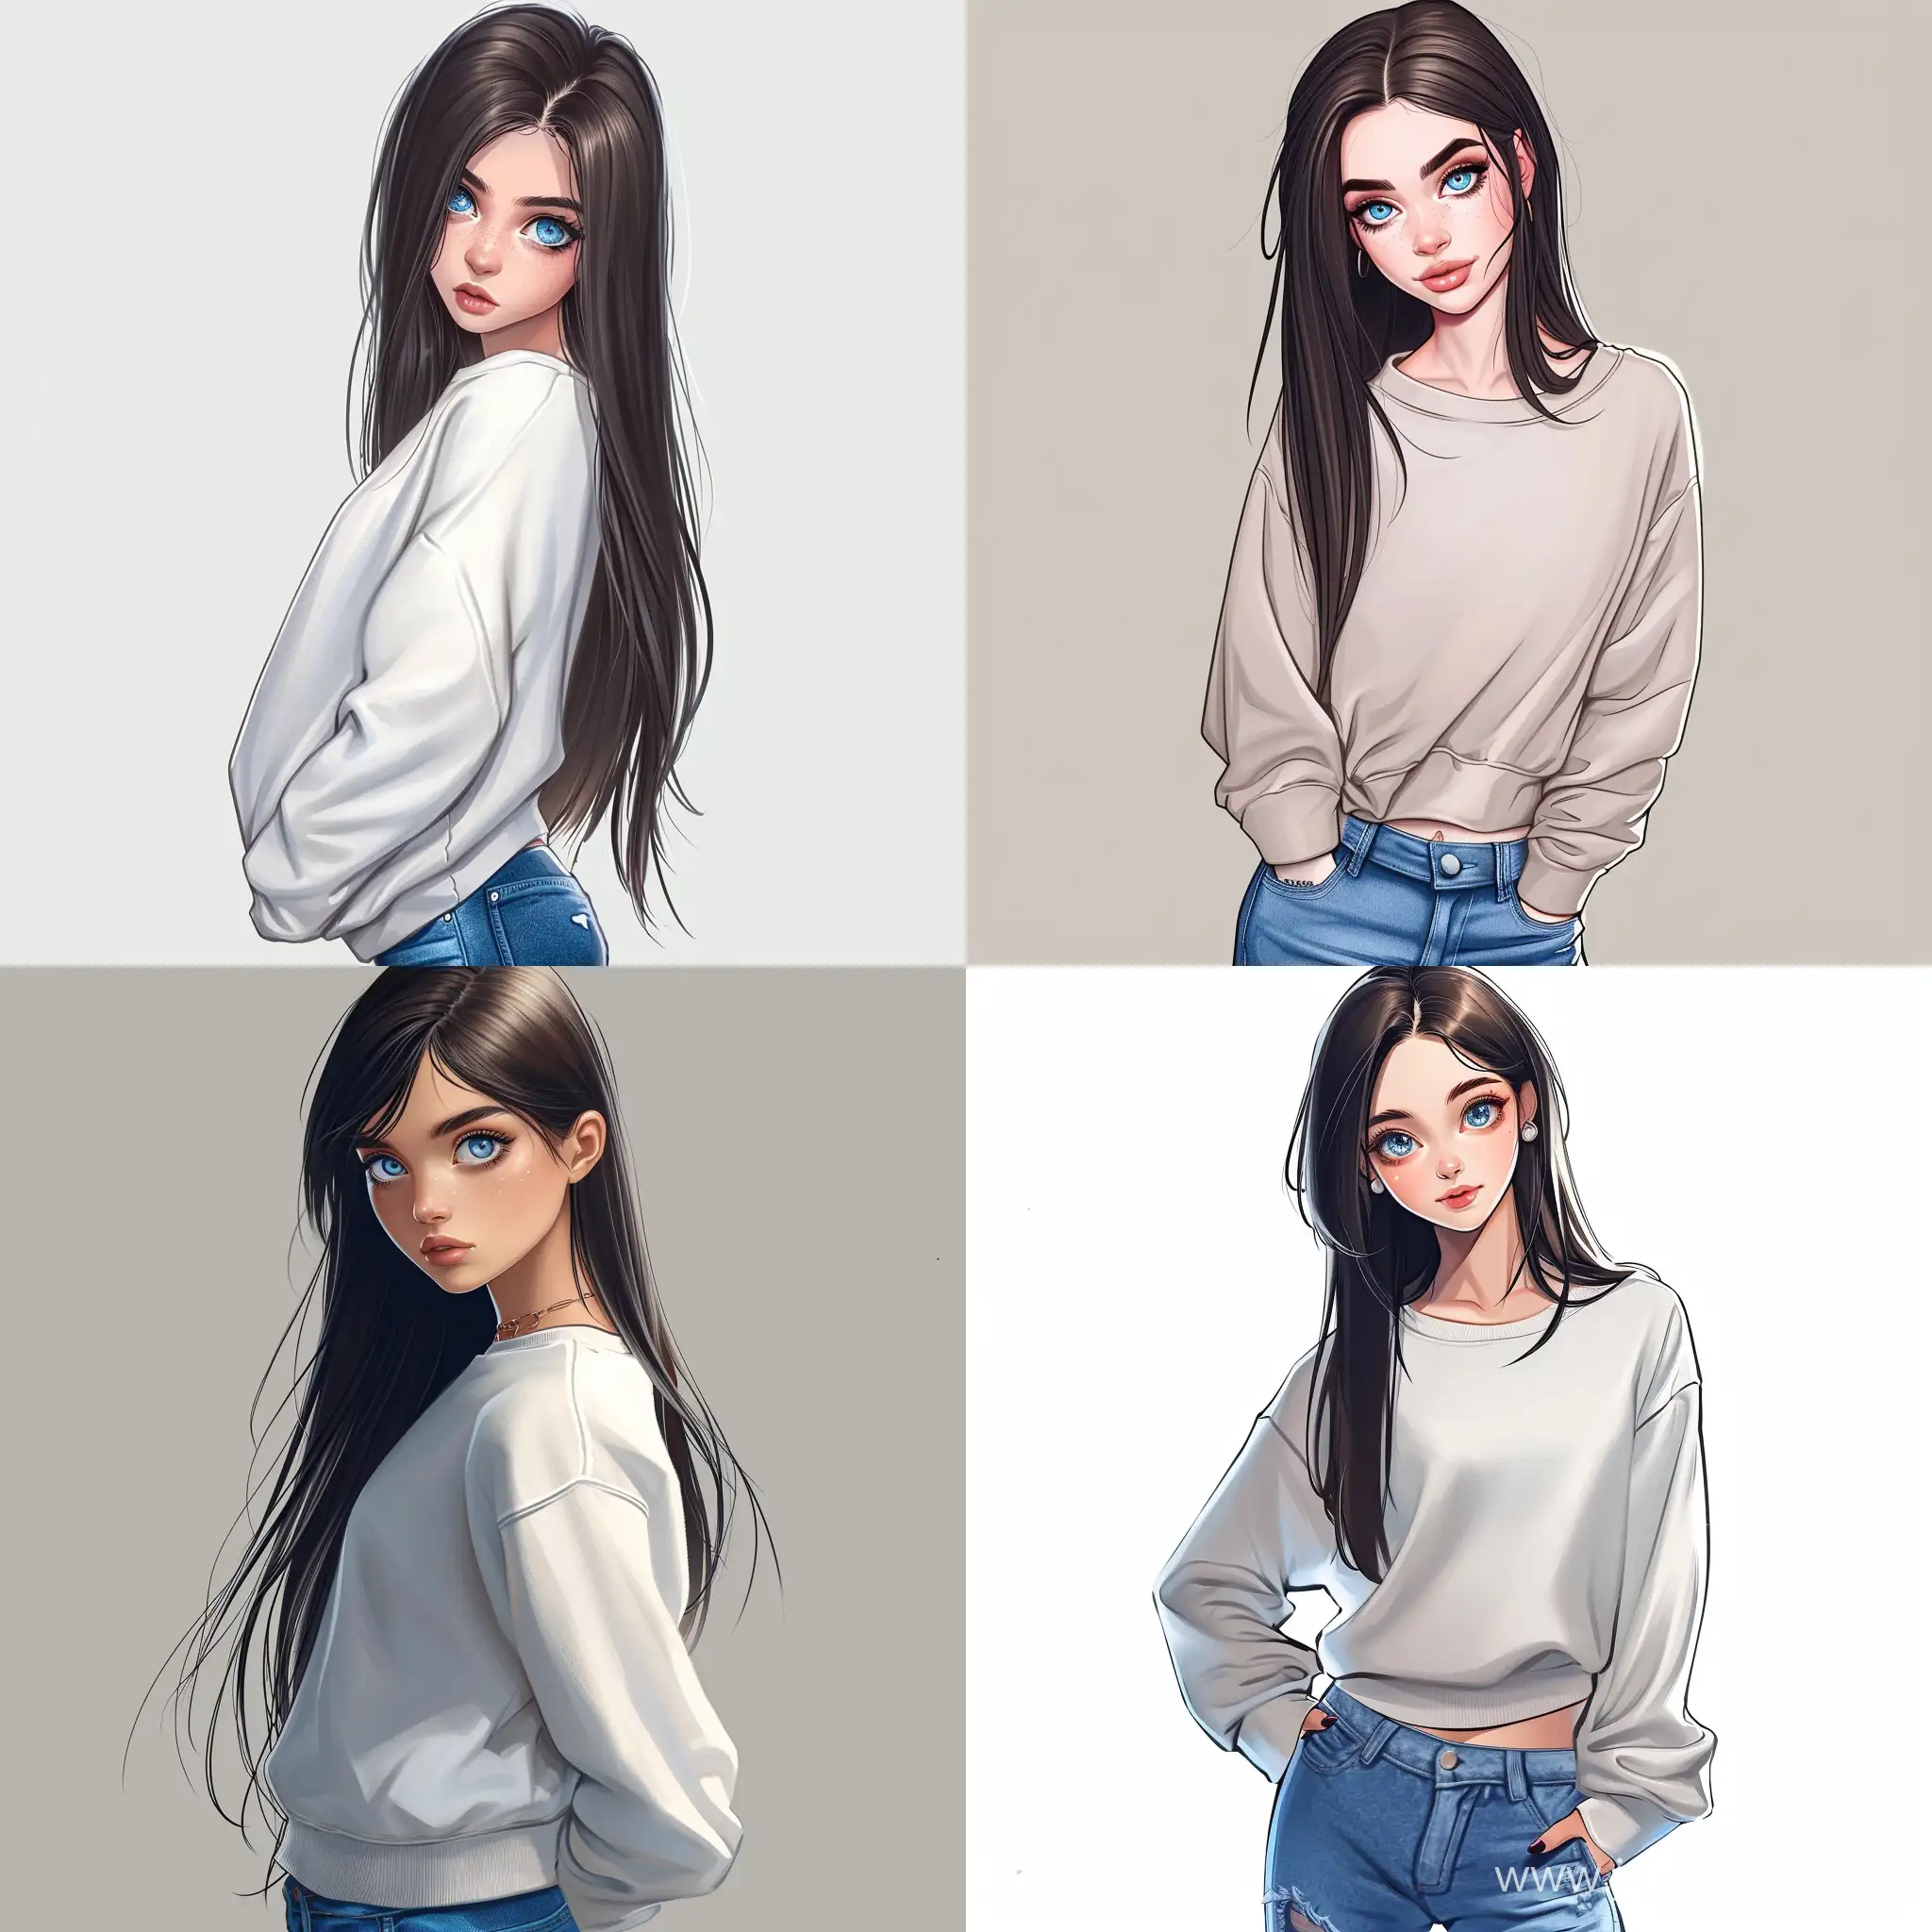 Expressive-BlueEyed-Teenager-in-Stylish-Sweatshirt-and-Jeans-HighQuality-Cartoon-Art